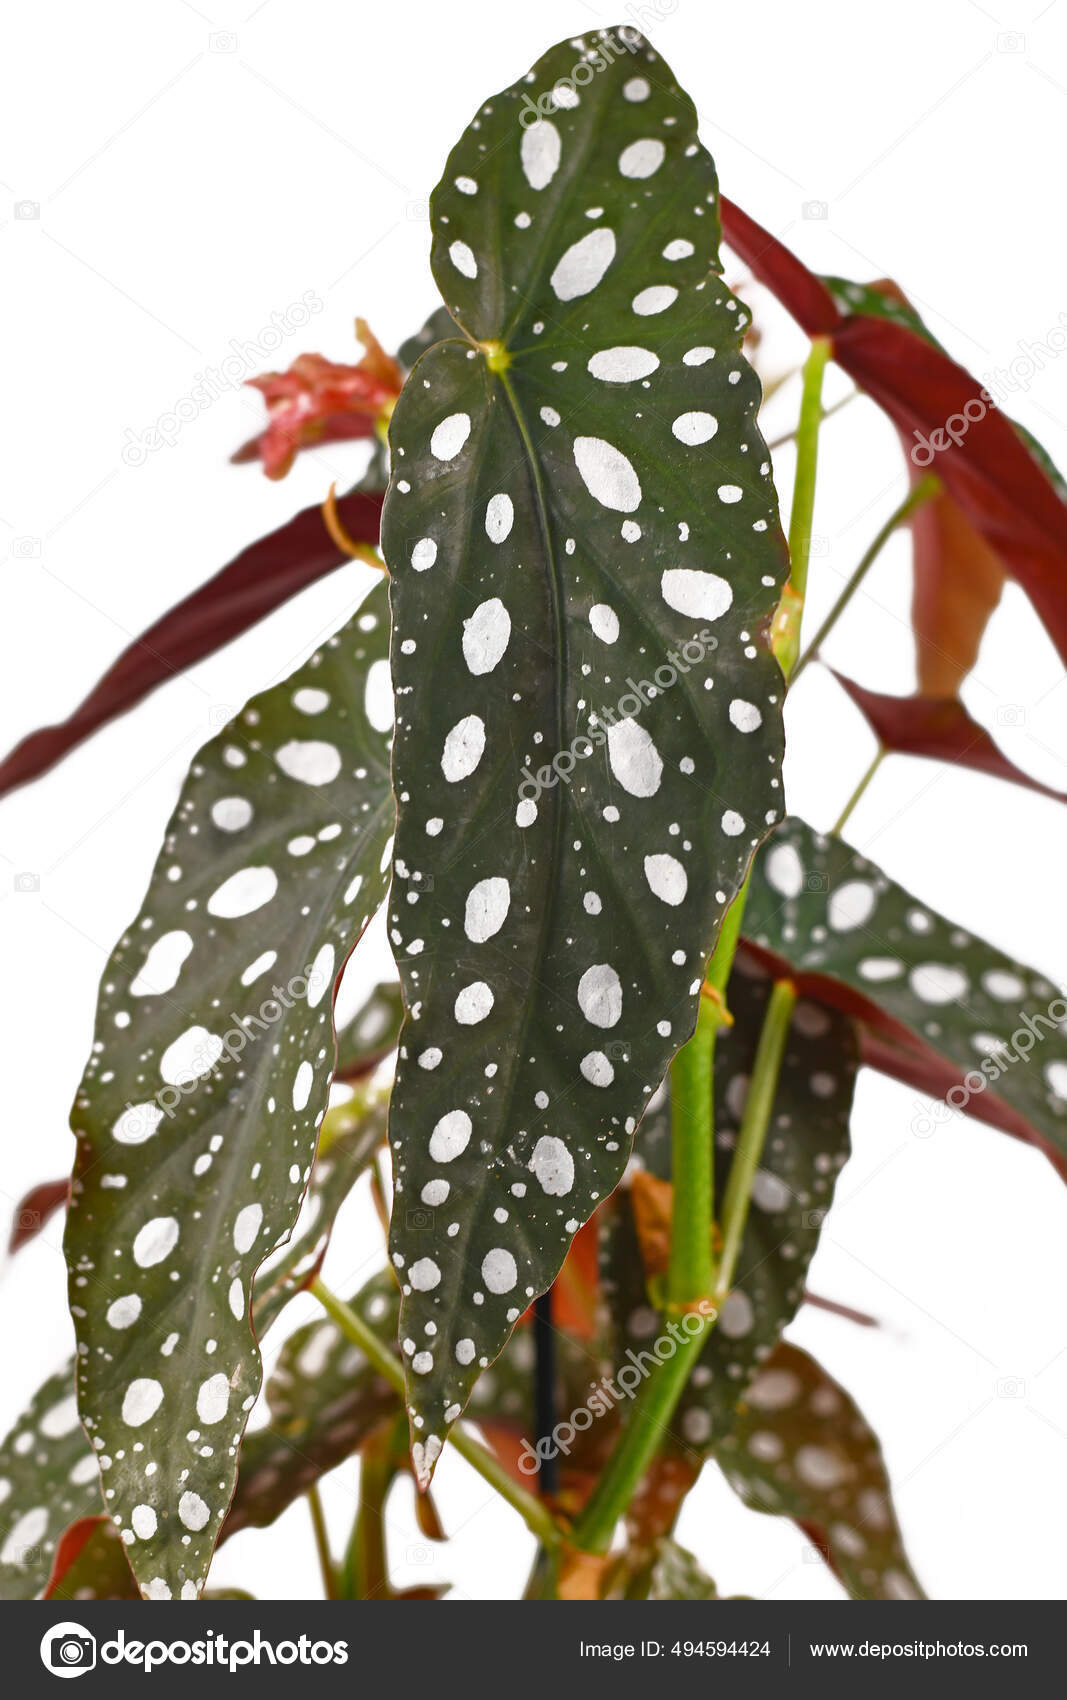 Fotos de Begonia maculata, Imagens de Begonia maculata sem royalties |  Depositphotos